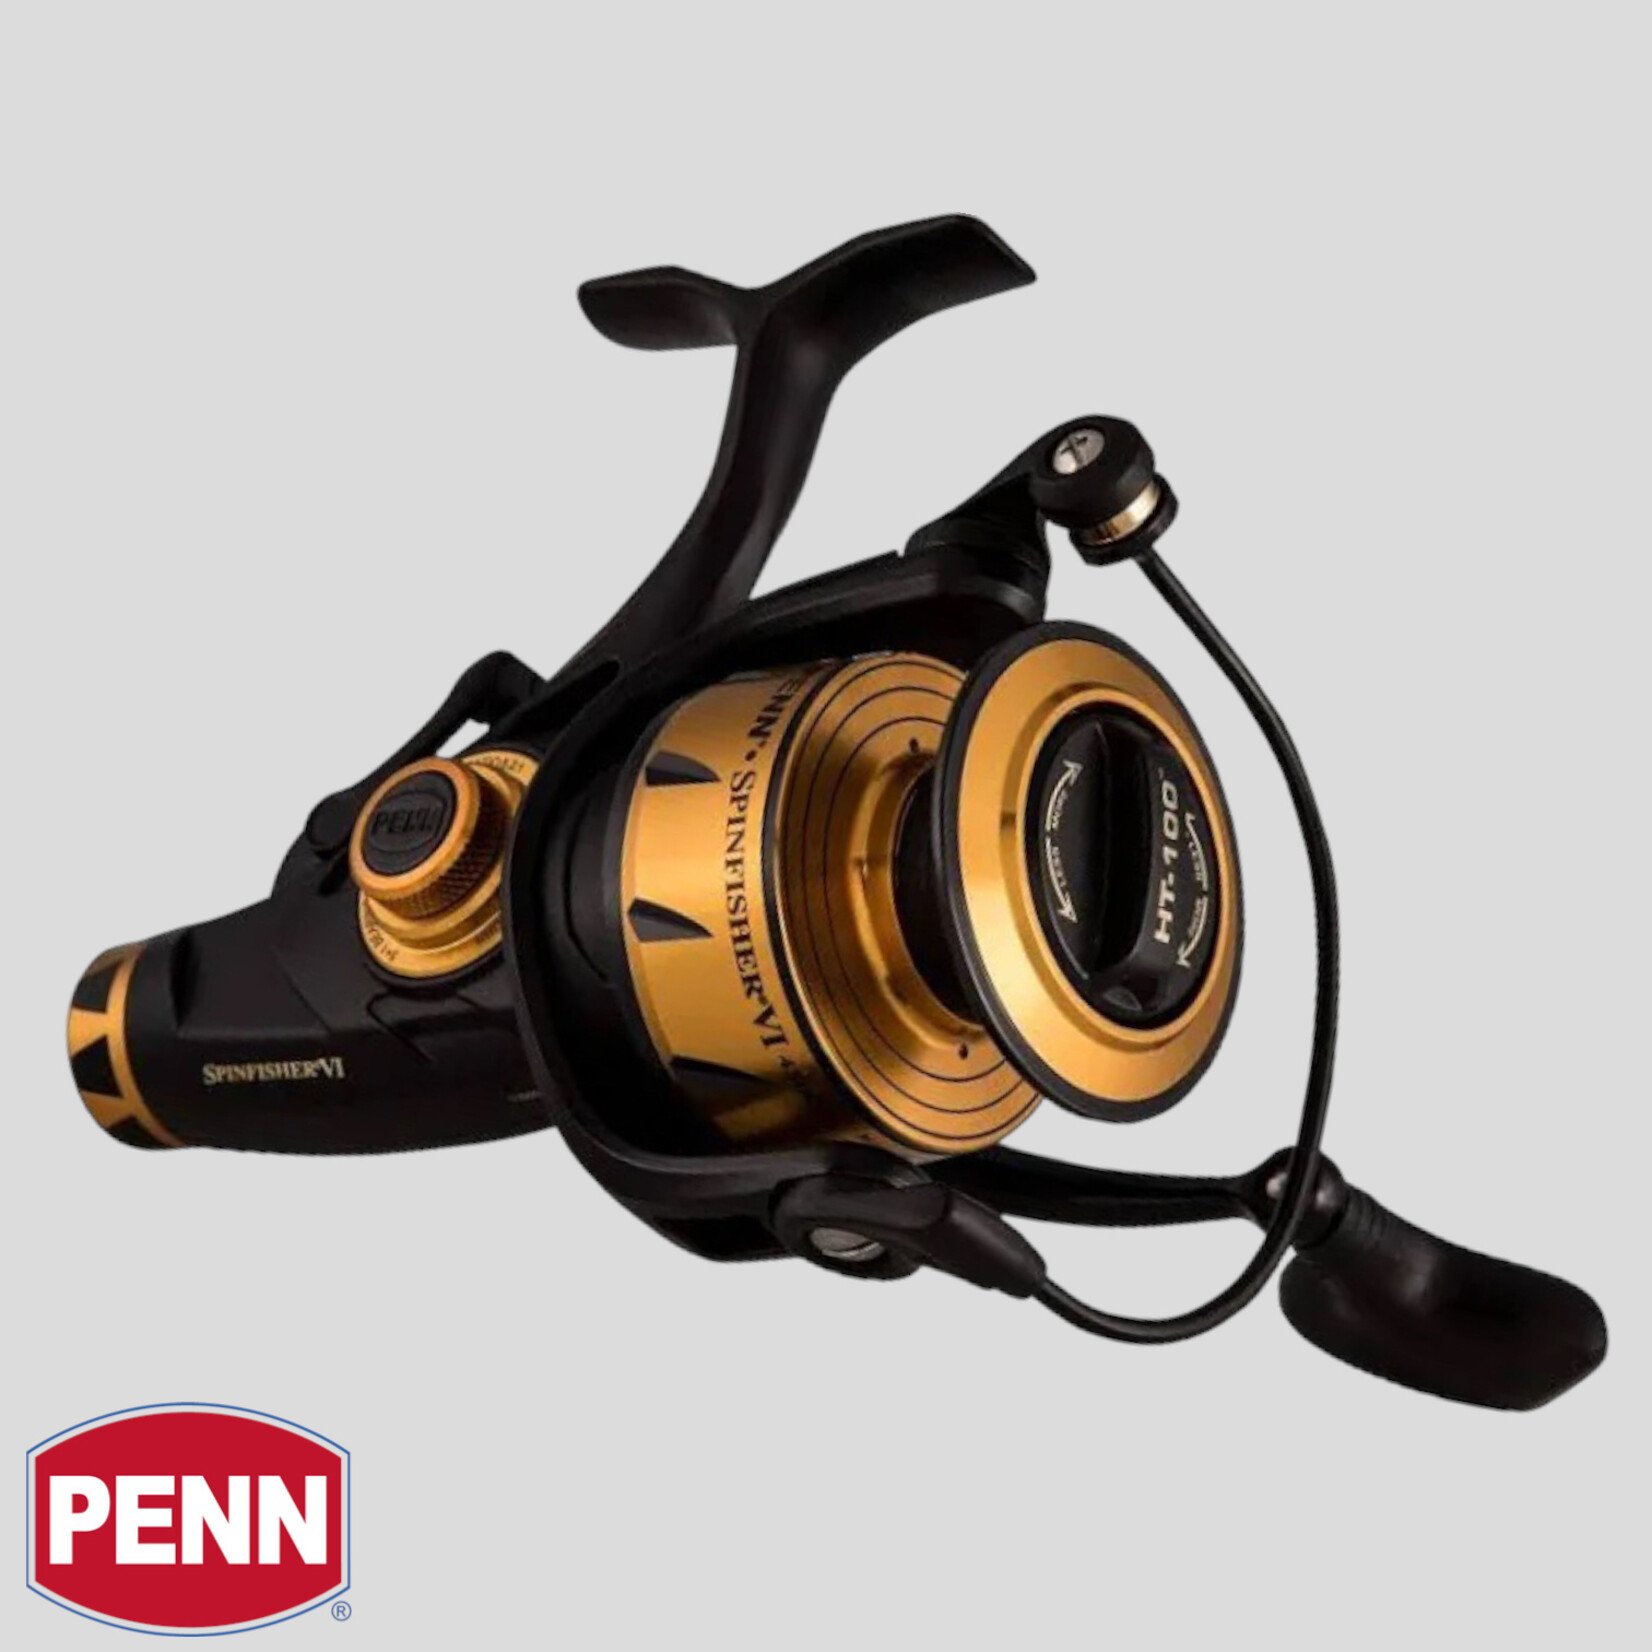 Penn Spinfisher VI Series Spinning Reel